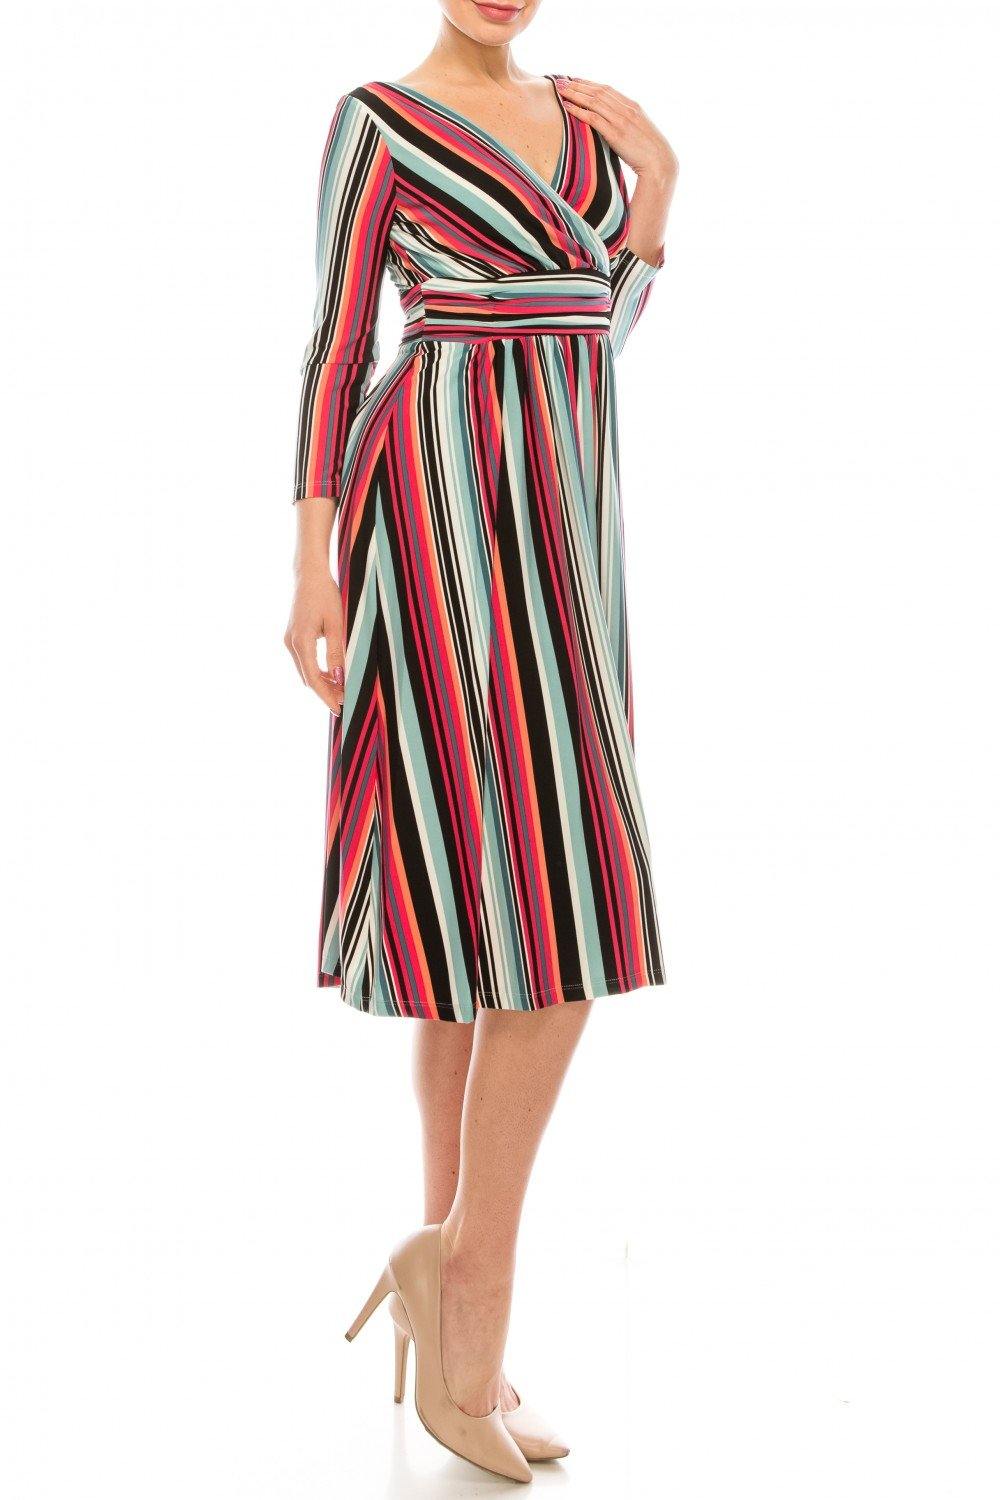 London Times Soft Striped Empire Waist Midi Dress - The Dress Outlet